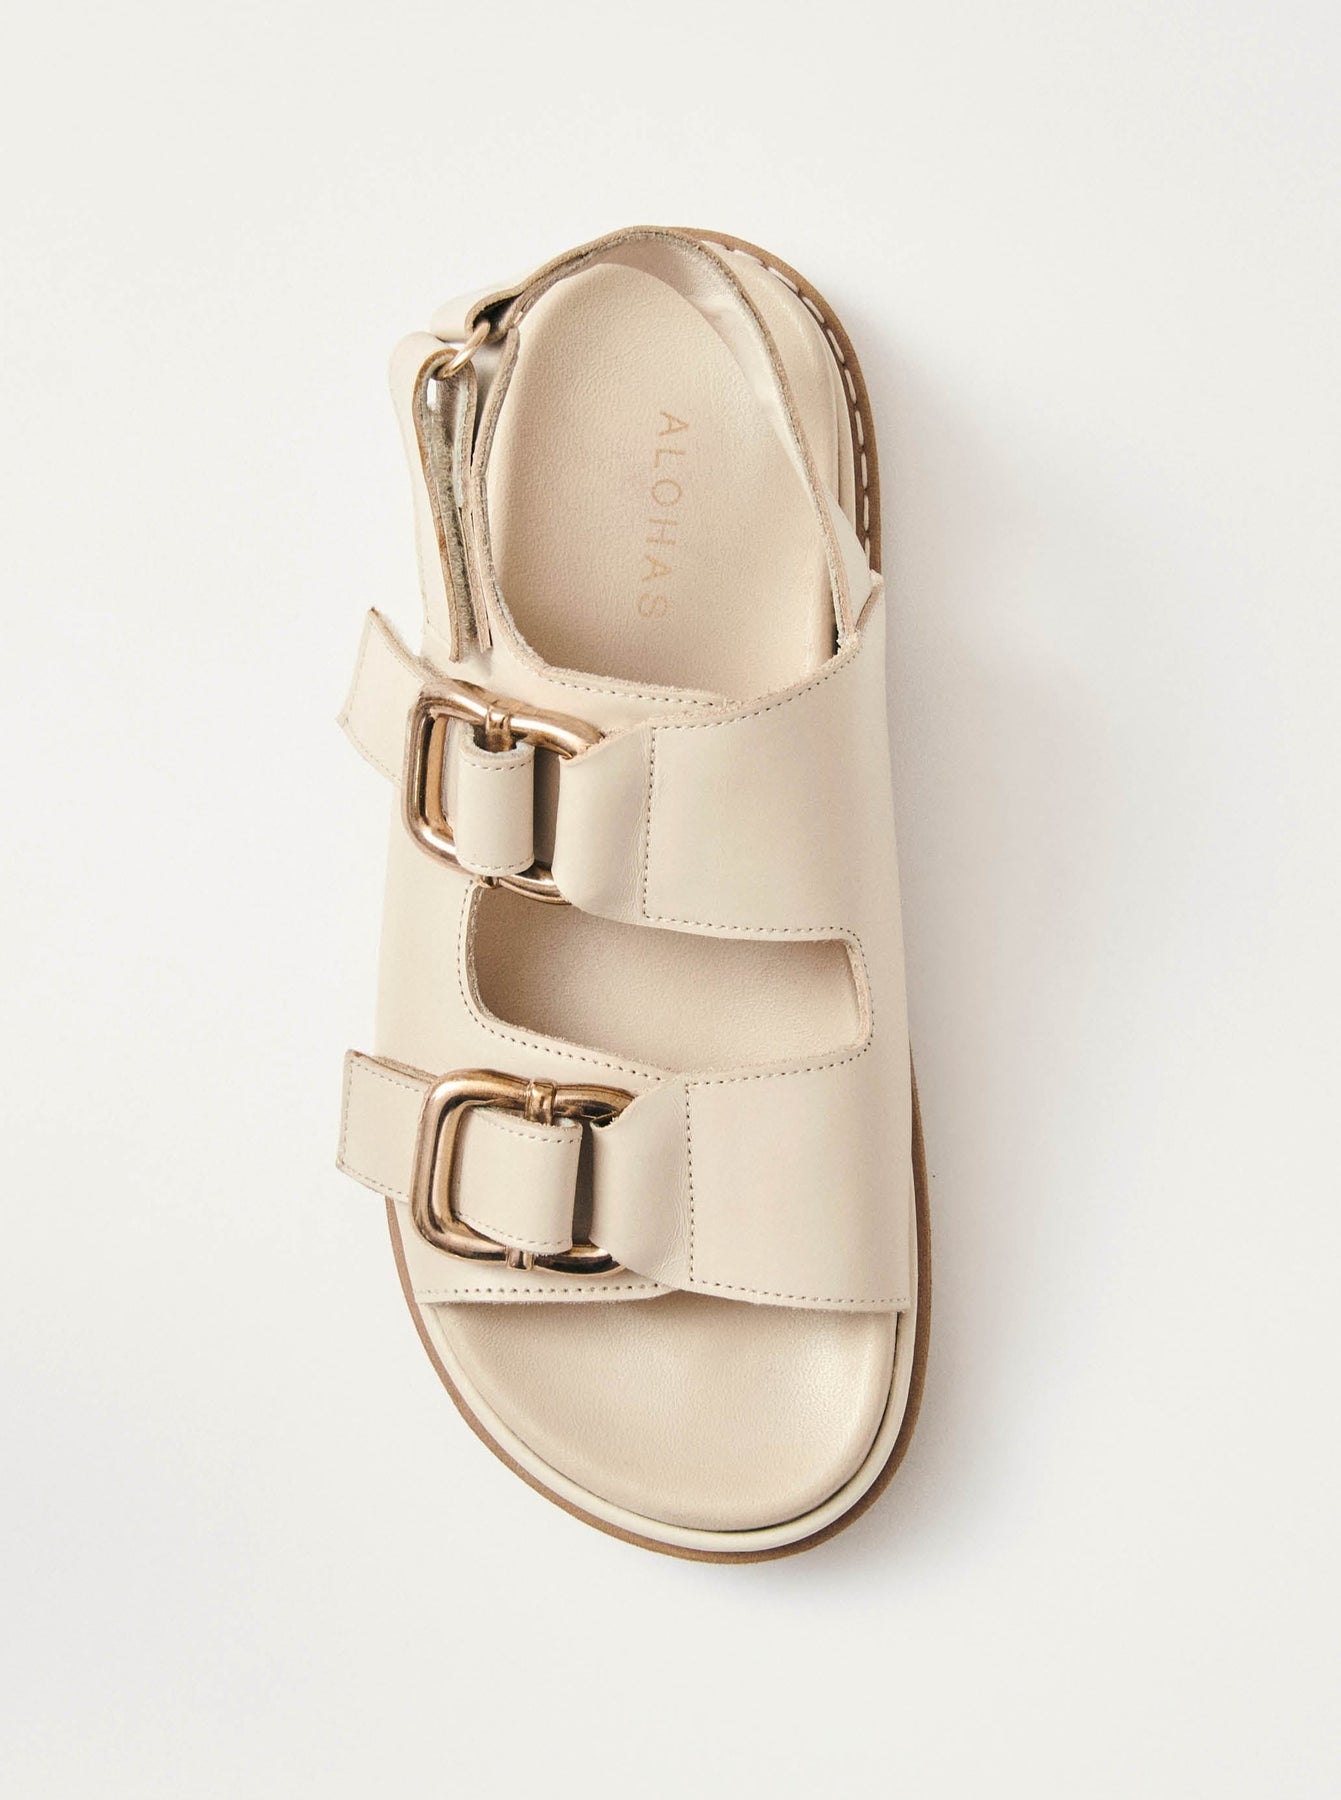 Harper Cream Leather Sandals – For Days